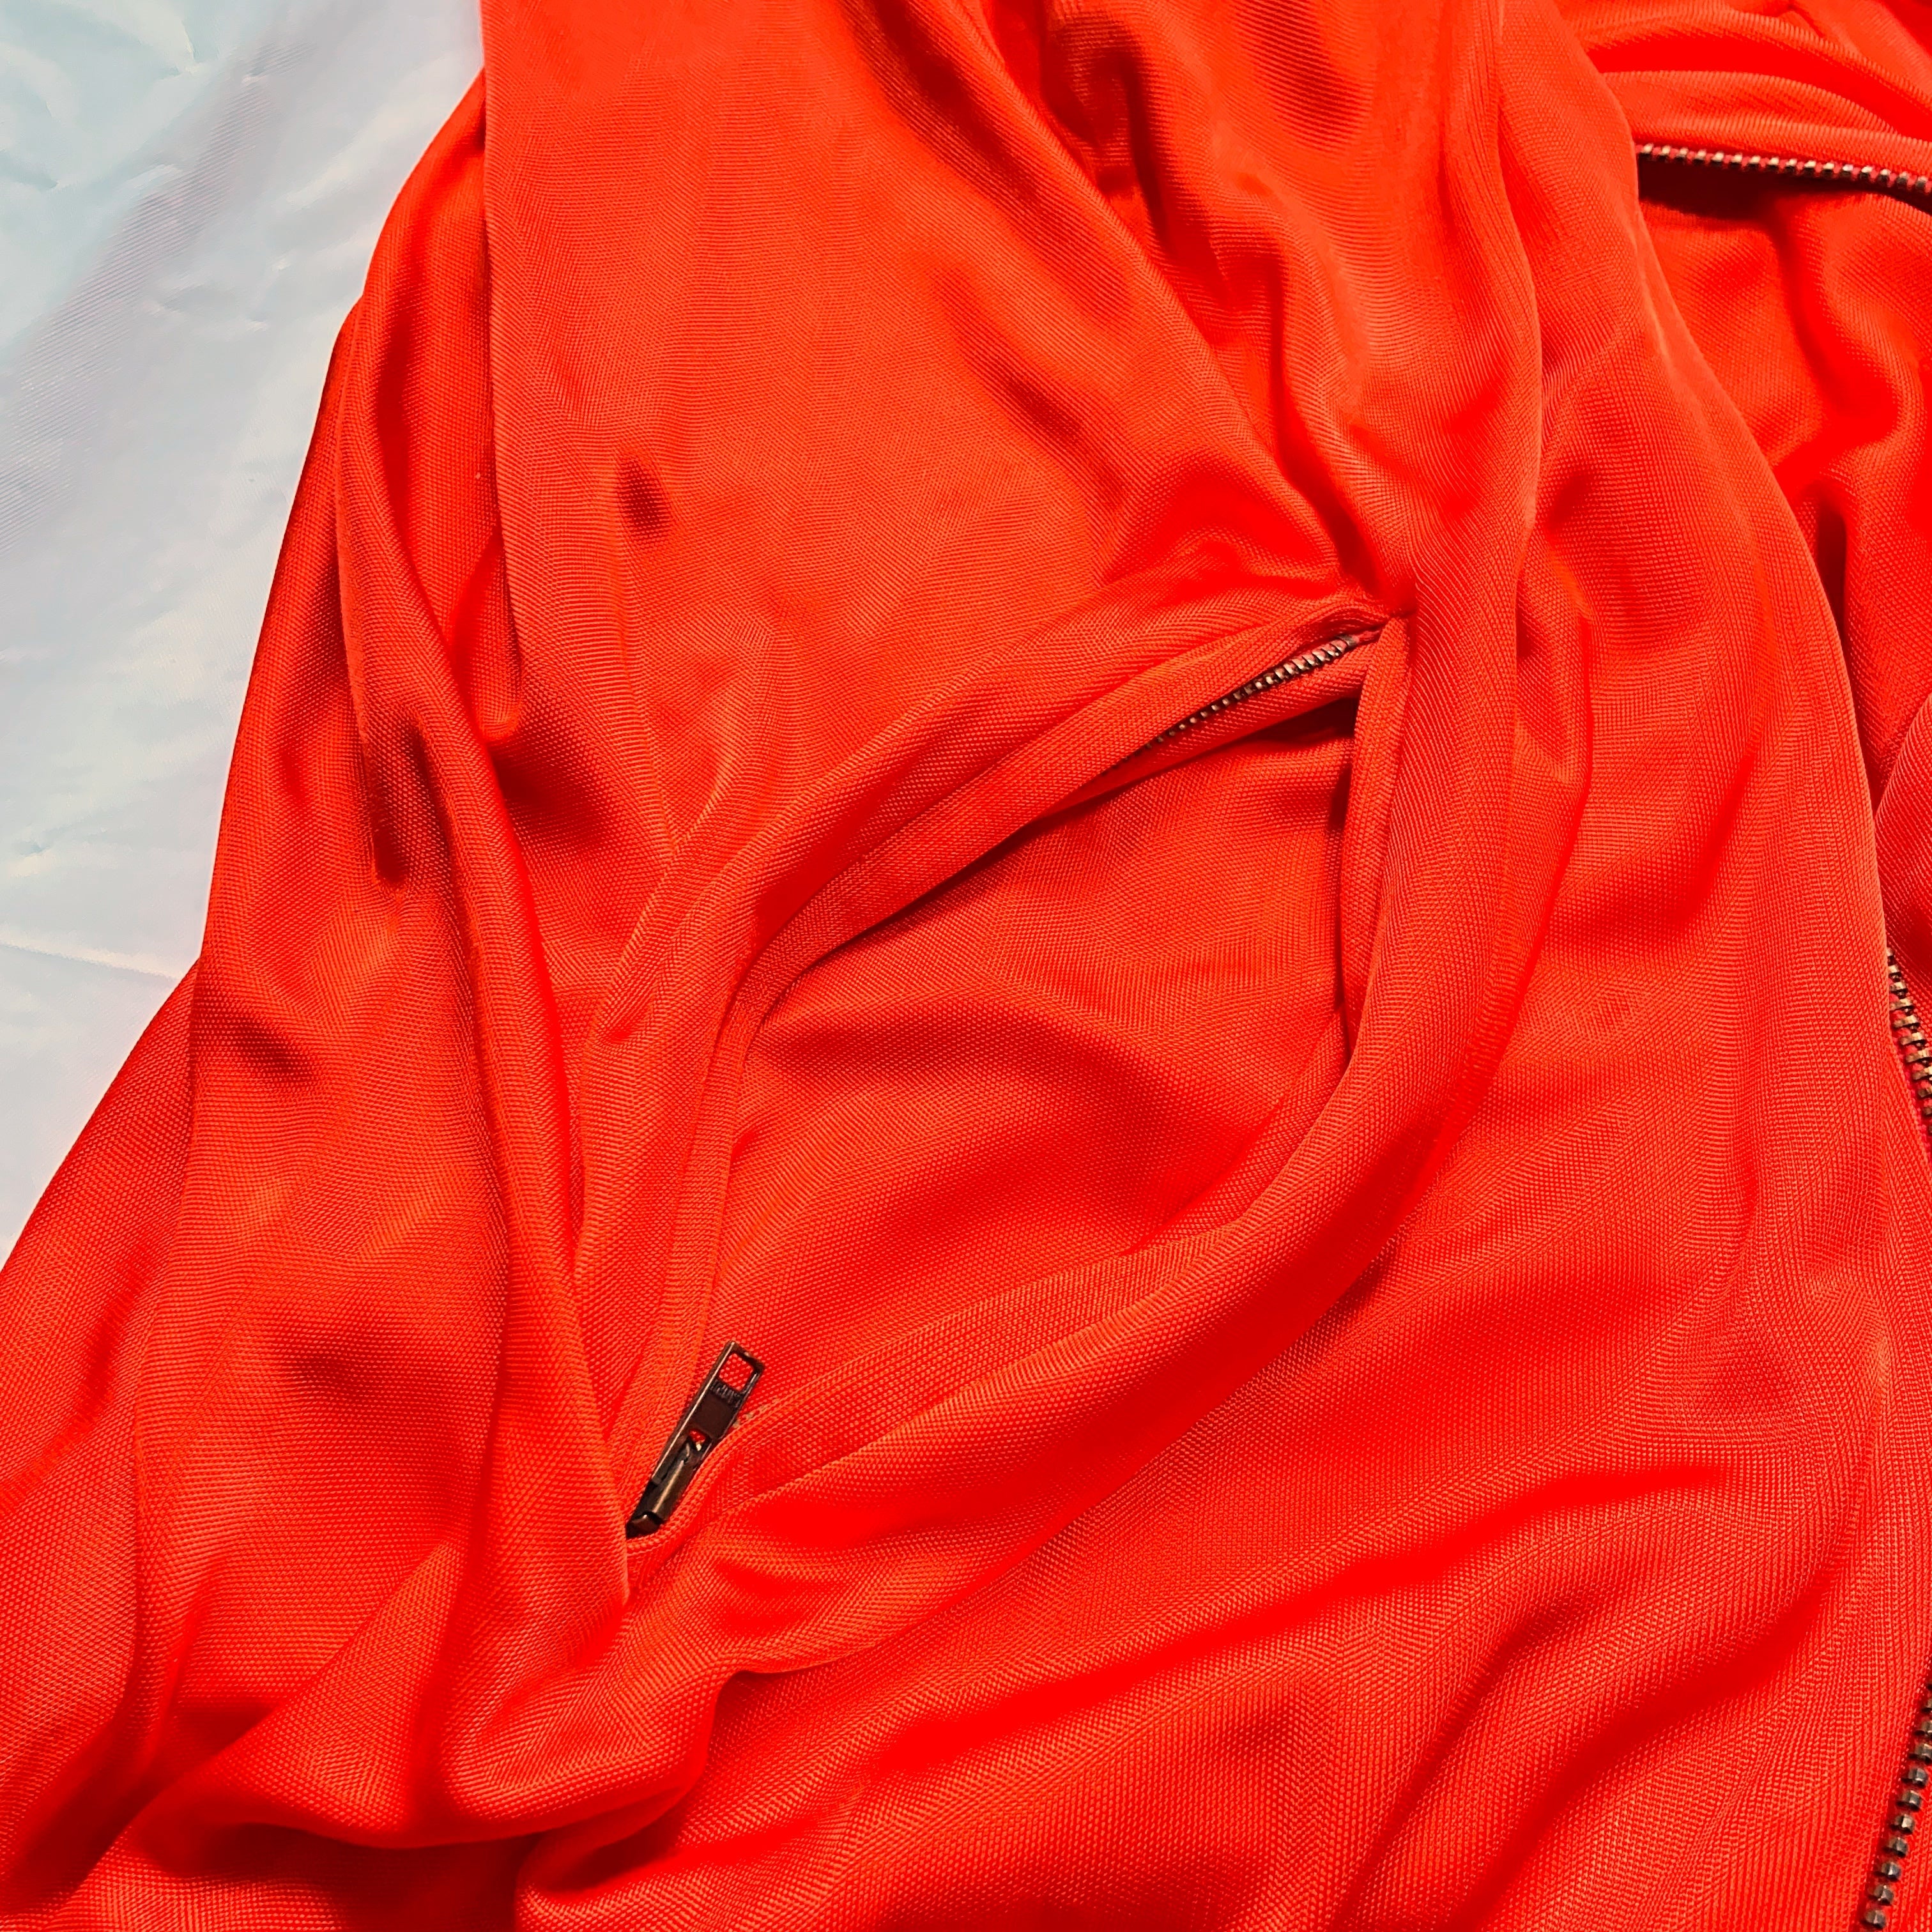 Jean Paul Gaultier fall 2007 red bomber zip dress - 10